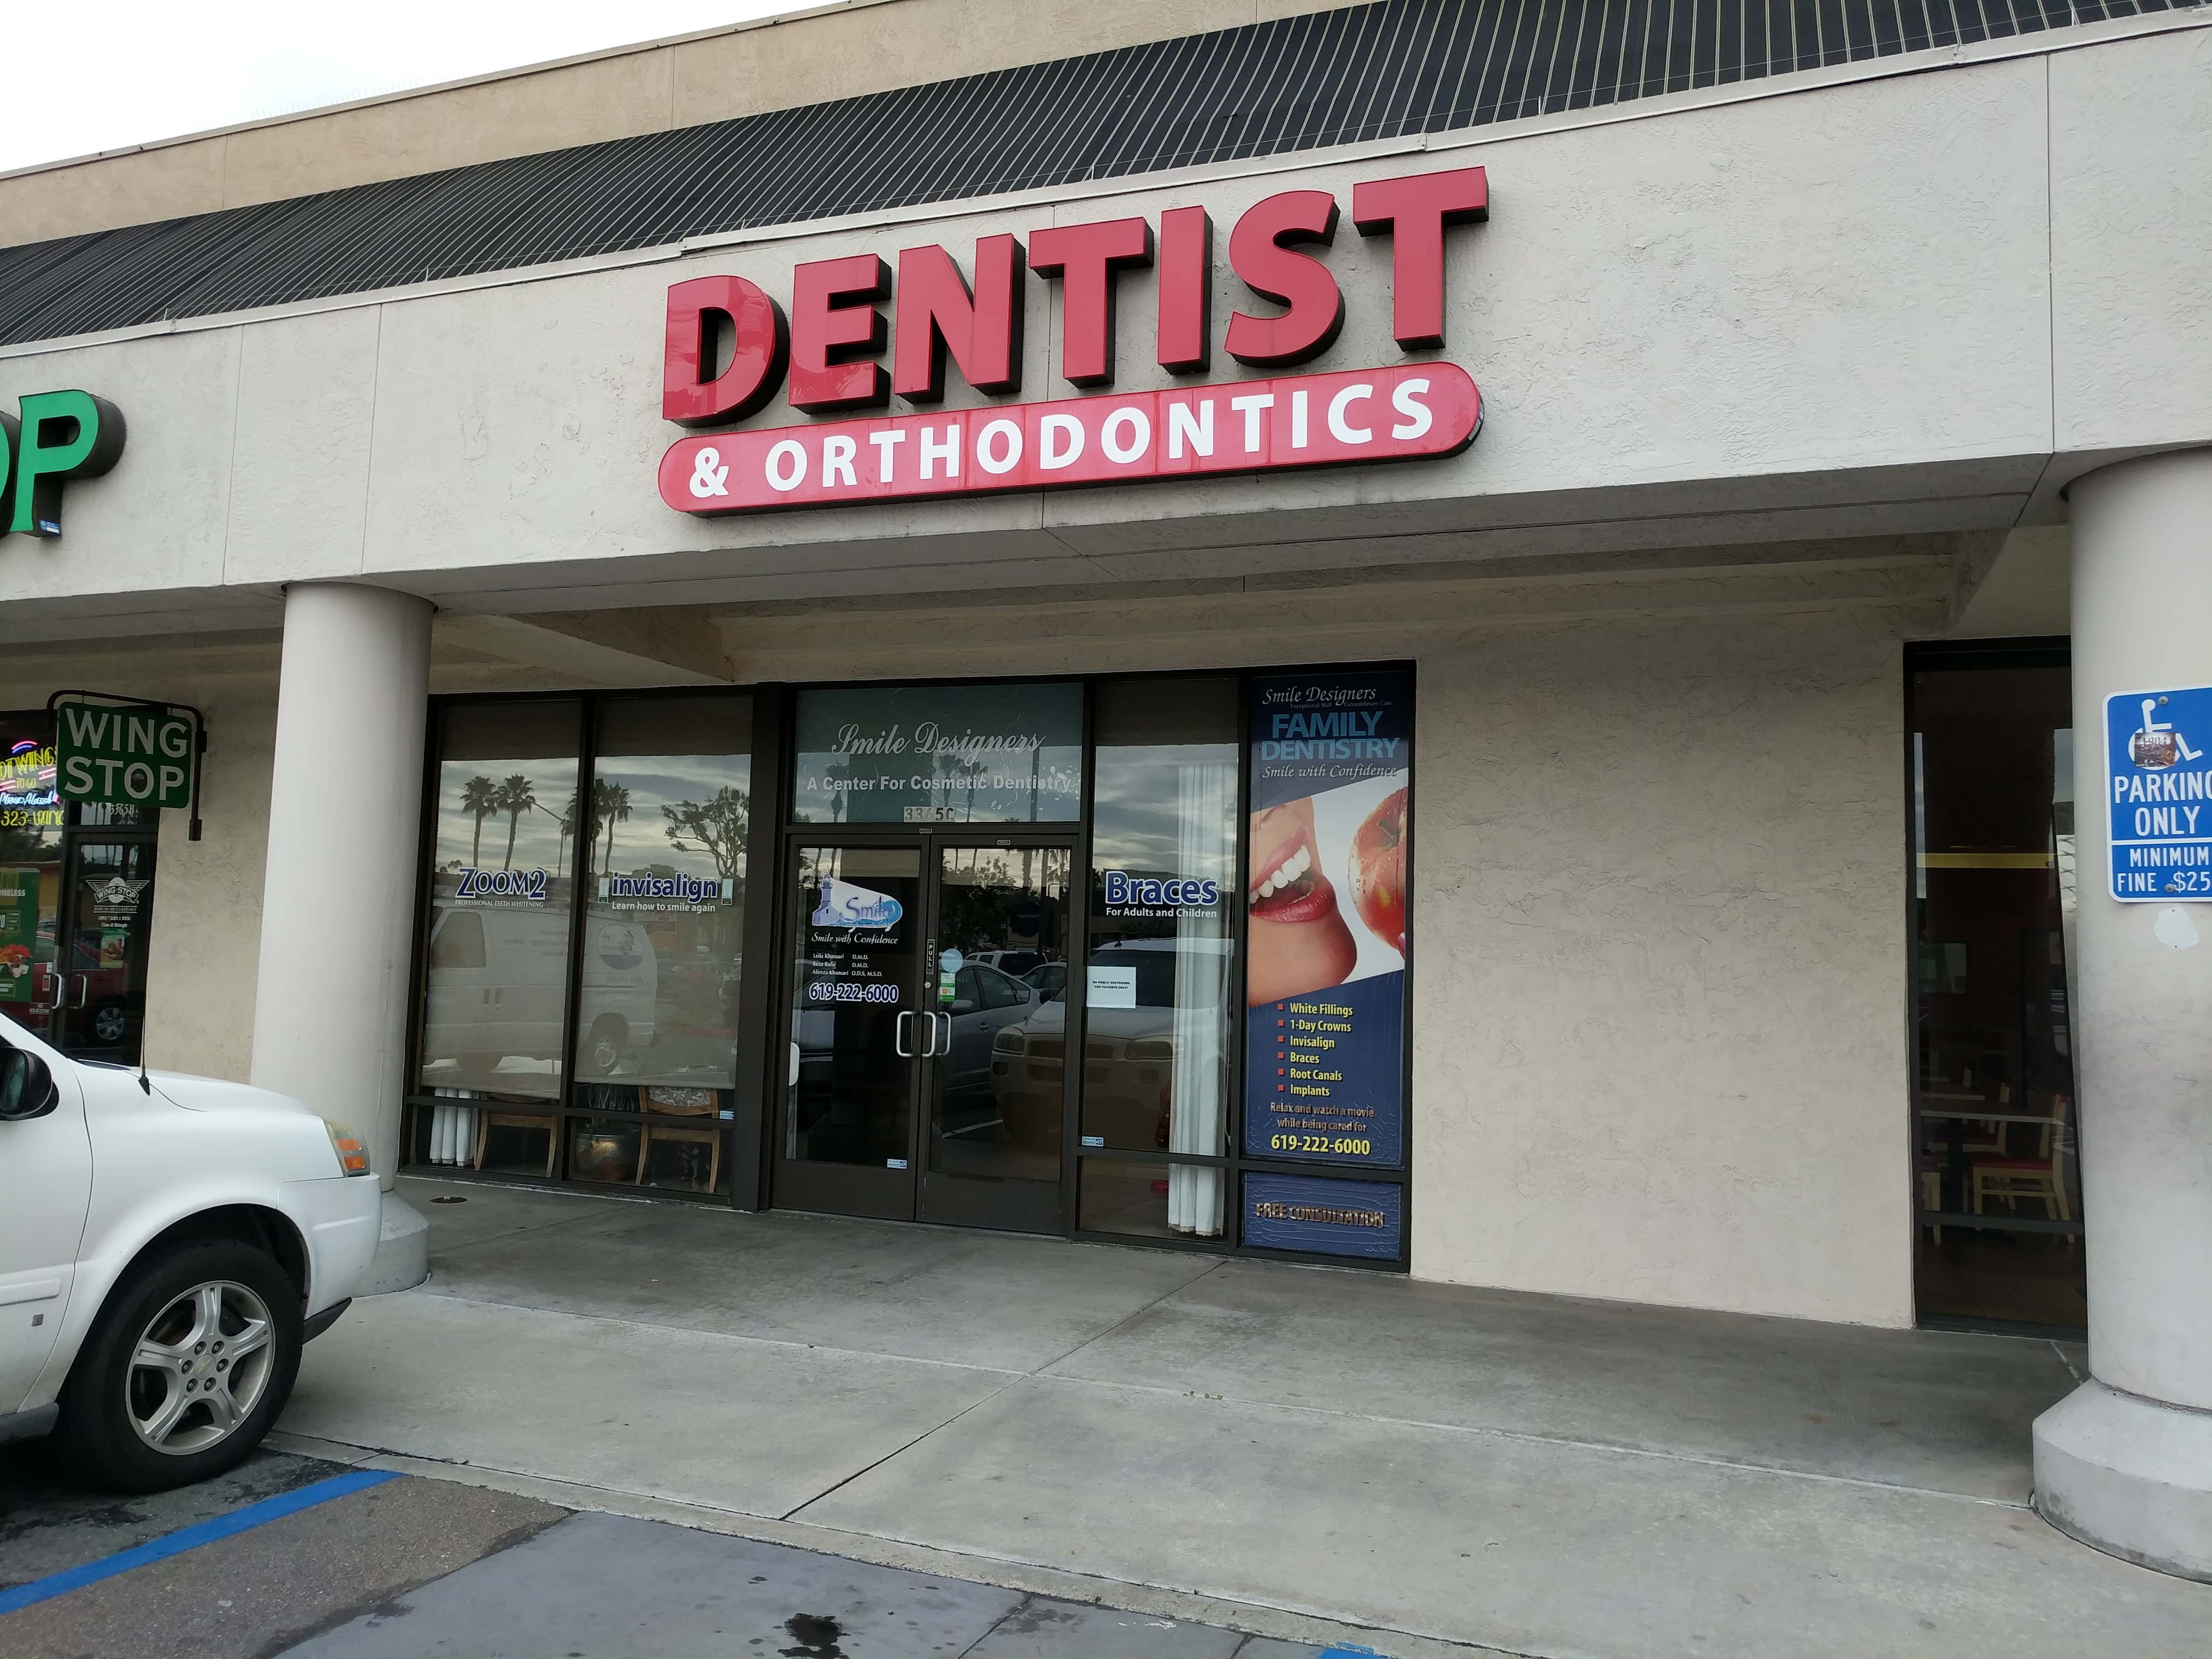 Smile Designers - San Diego (CA 92110), US, dental hygienist